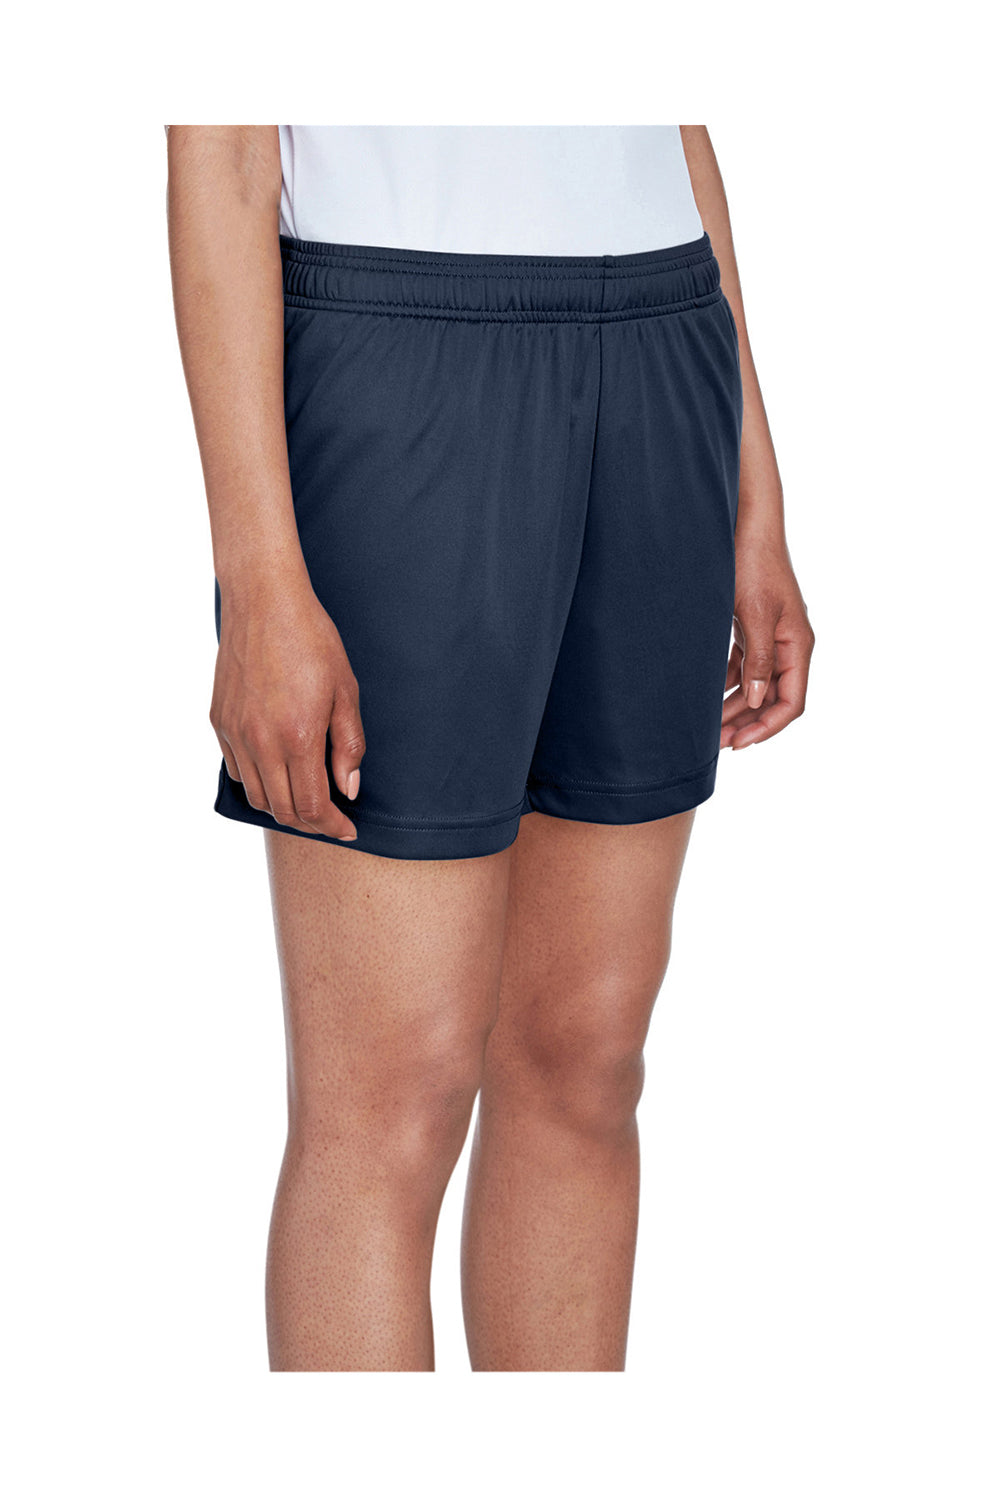 Team 365 TT11SHW Womens Zone Performance Shorts w/ Pockets Dark Navy Blue 3Q